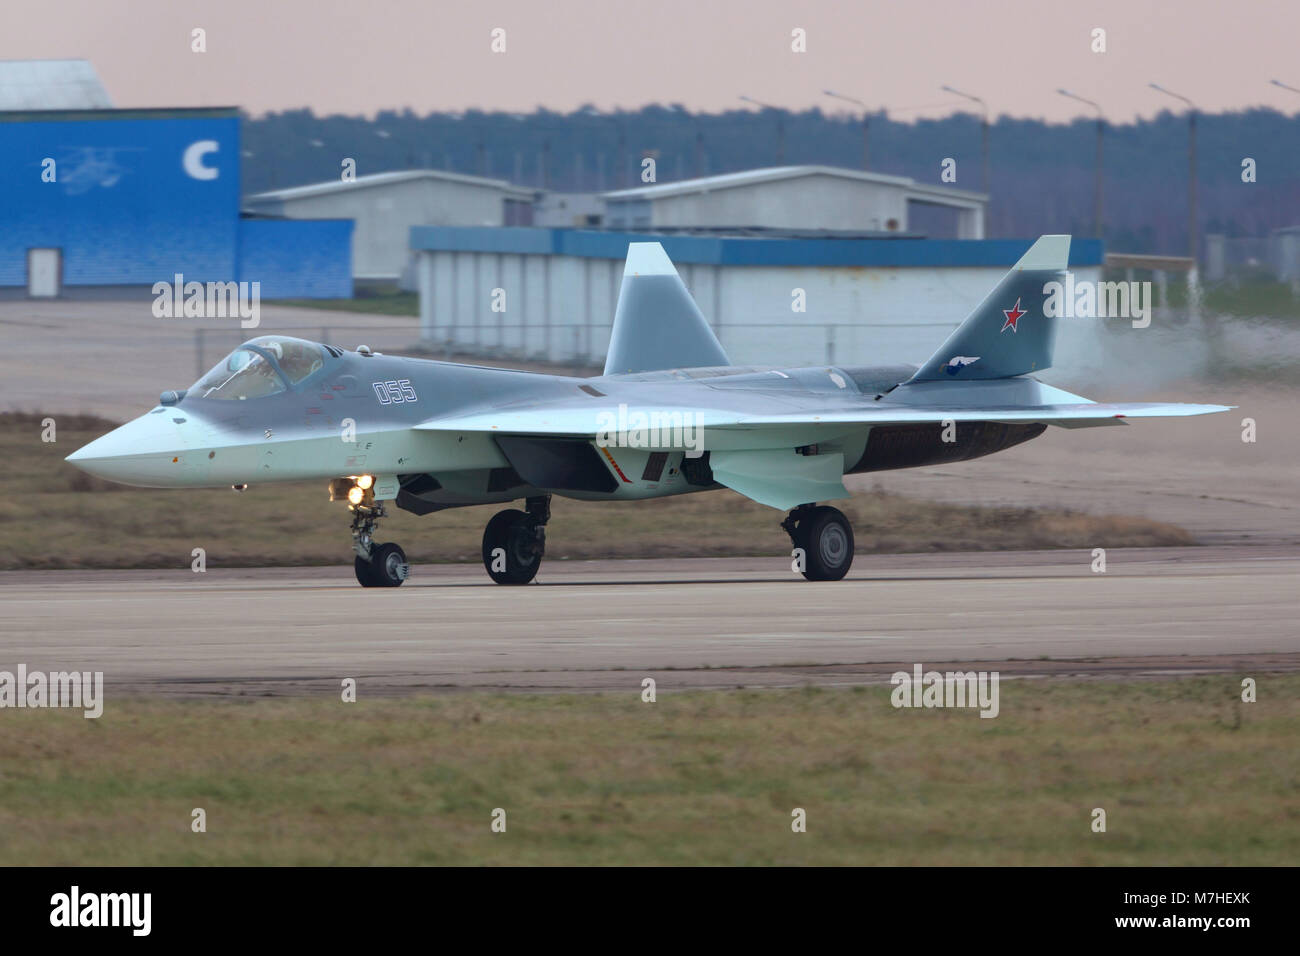 T-50 PAK-FA fifth generation Russian jet fighter landing in Russia. Stock Photo